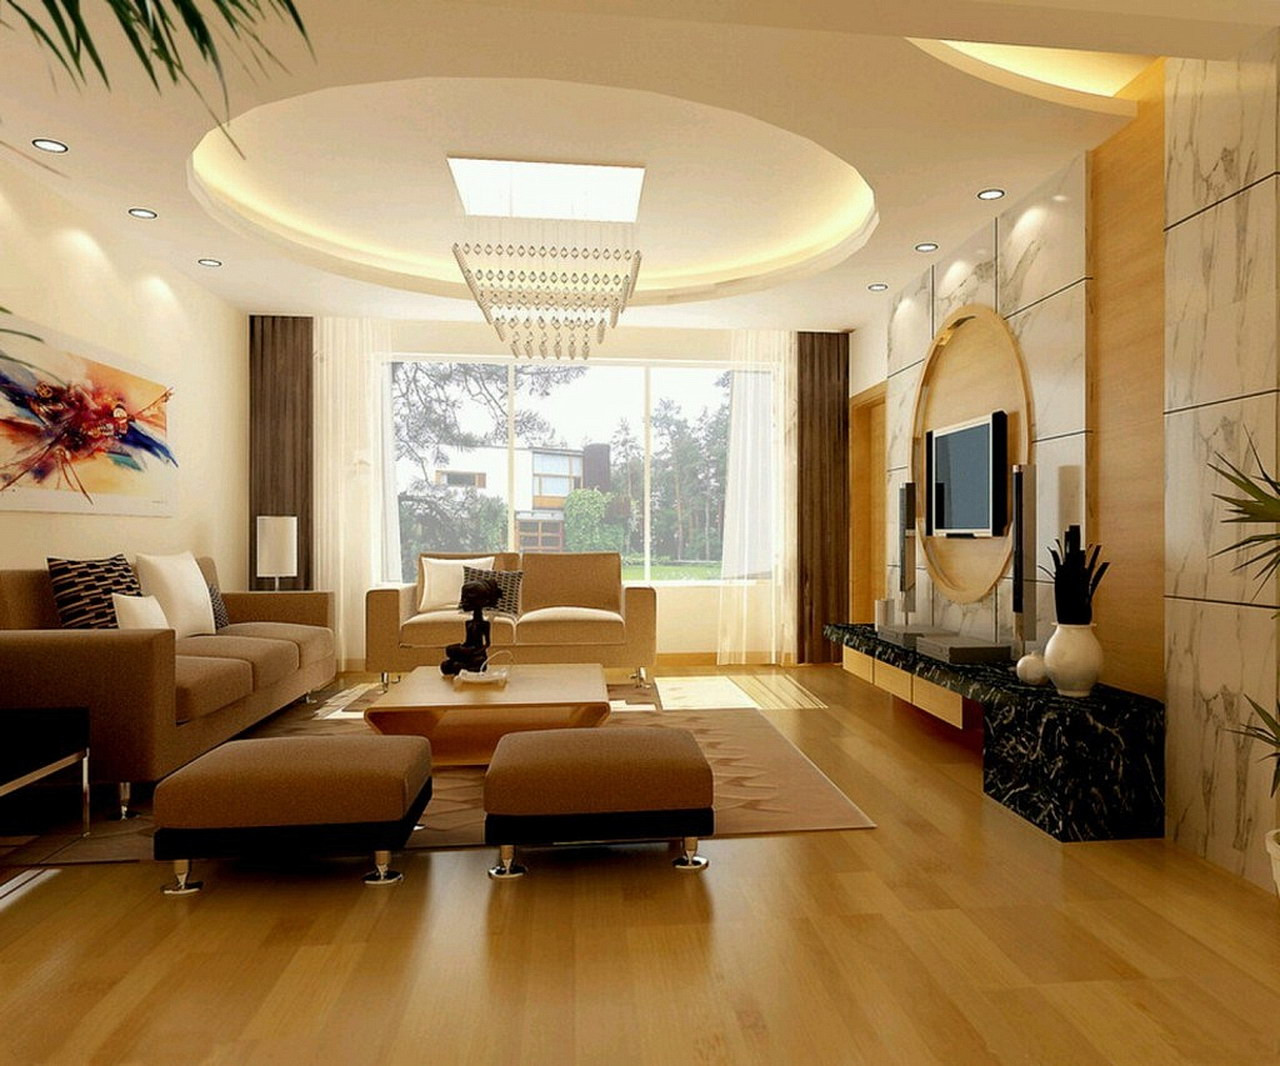 cool lighting ideas for living room